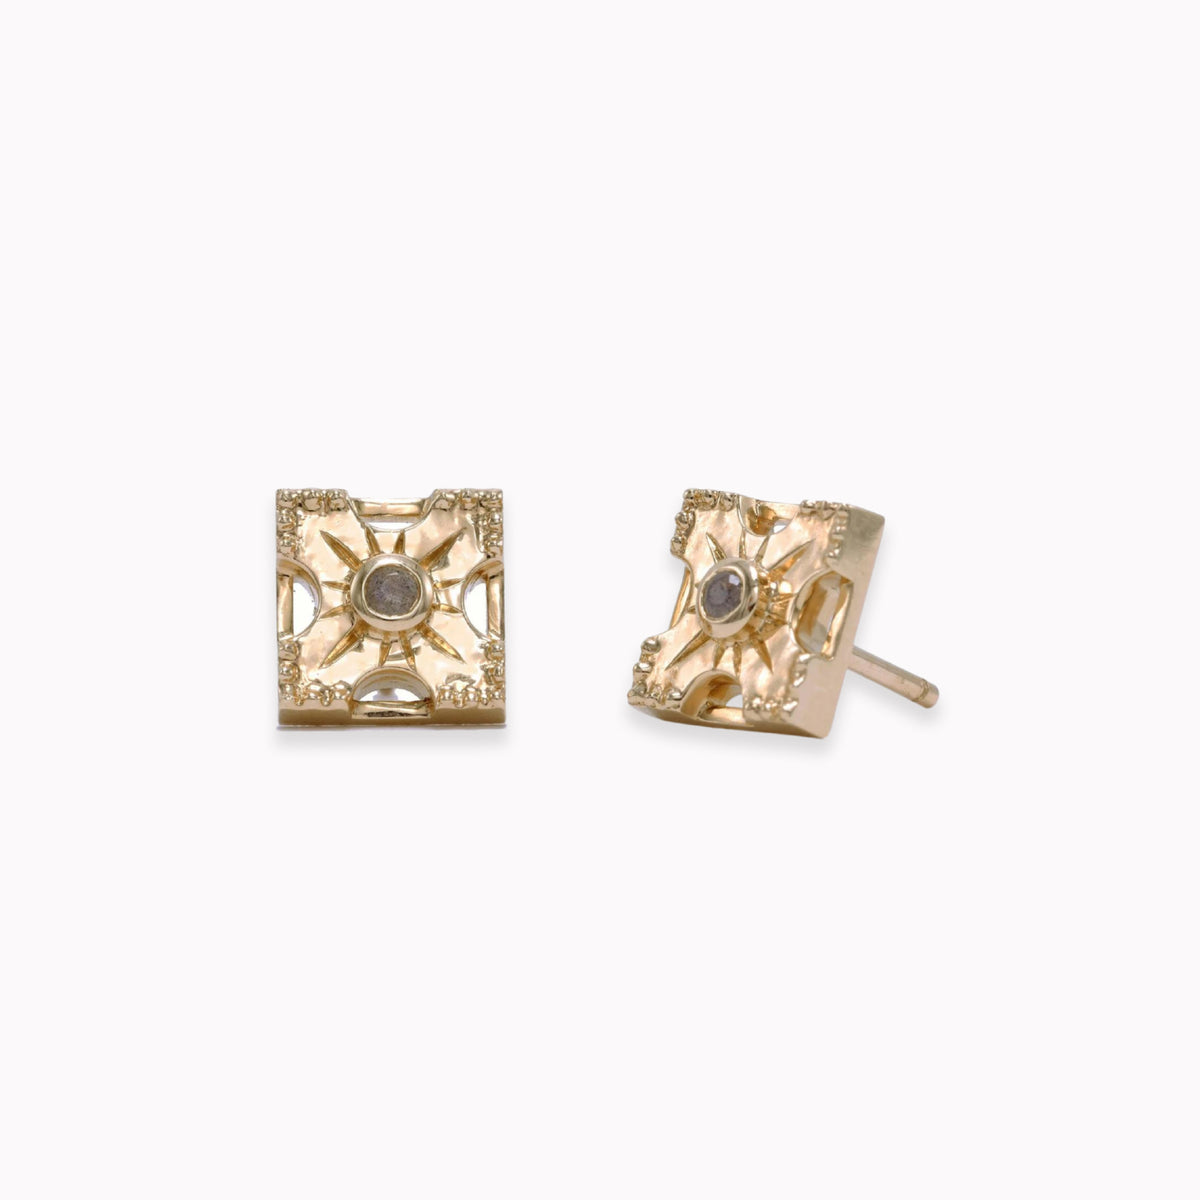 Buy Online Stone Work Ear Rings in Gold : 174914 -